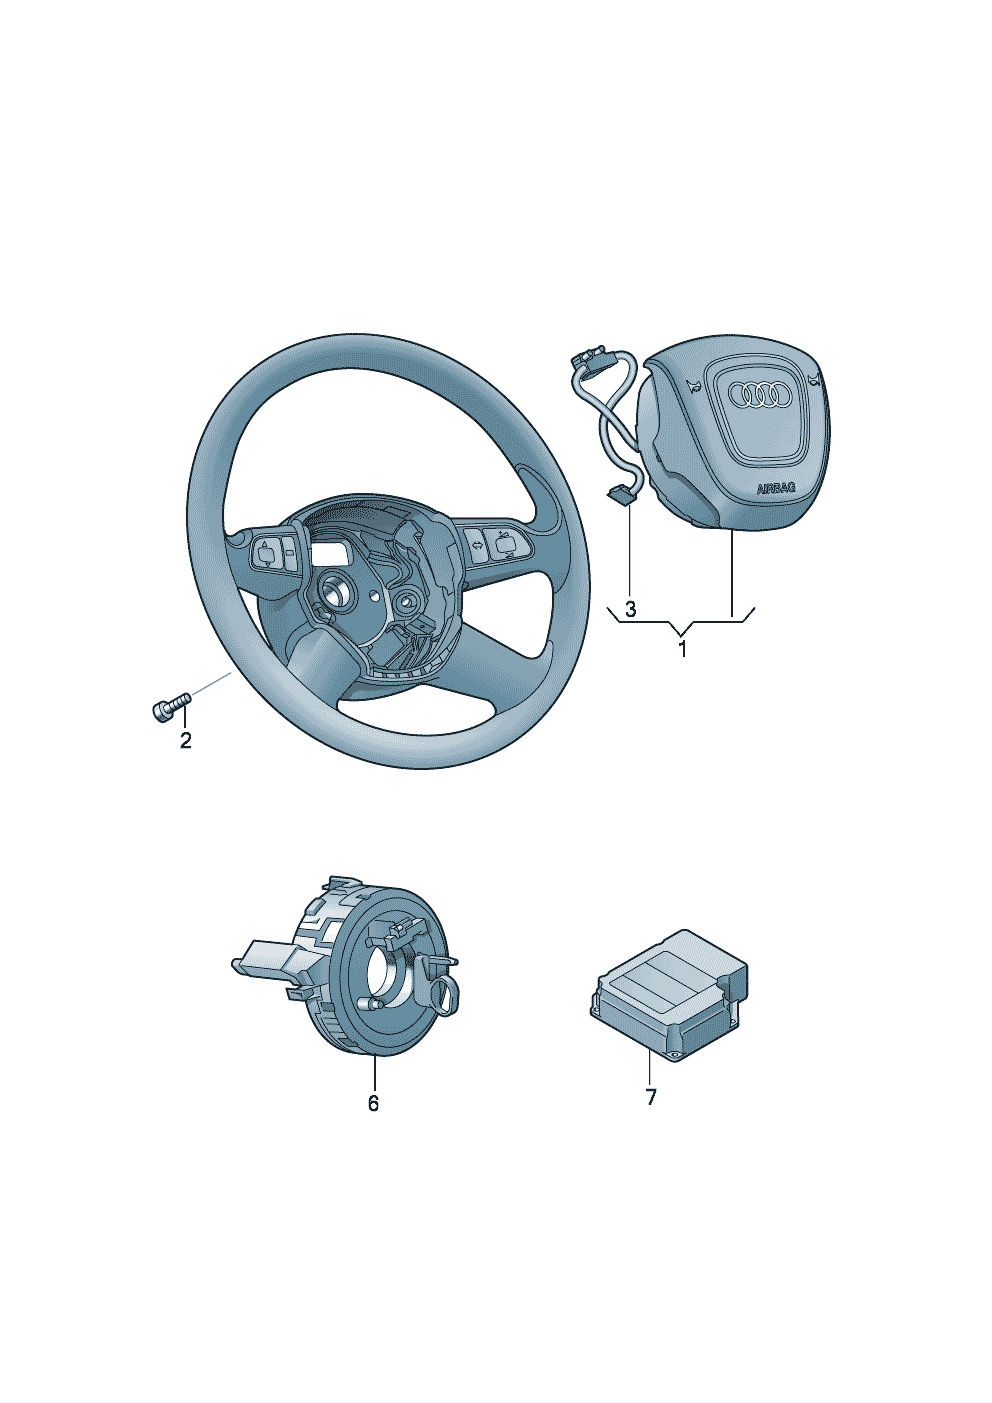 airbag unit for steering wheel<br/><br/><br/><br/><br/> Caution Hazardous <br/><br/><br/><br/><br/><br/>see workshop manual  - Audi A3/S3/Sportb./Lim./qu. - a3